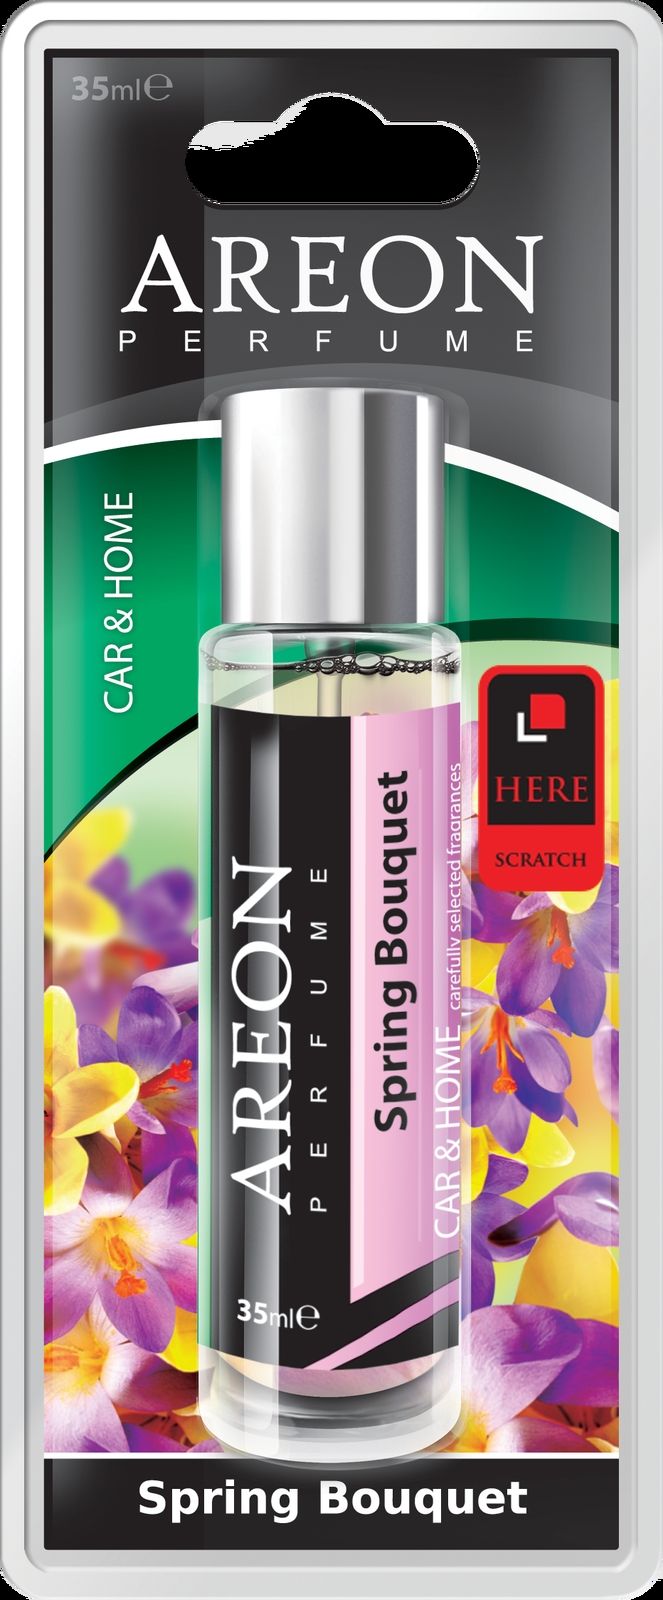 Air freshener fragrance tree atomizer spring 35ml original Areon car perfume